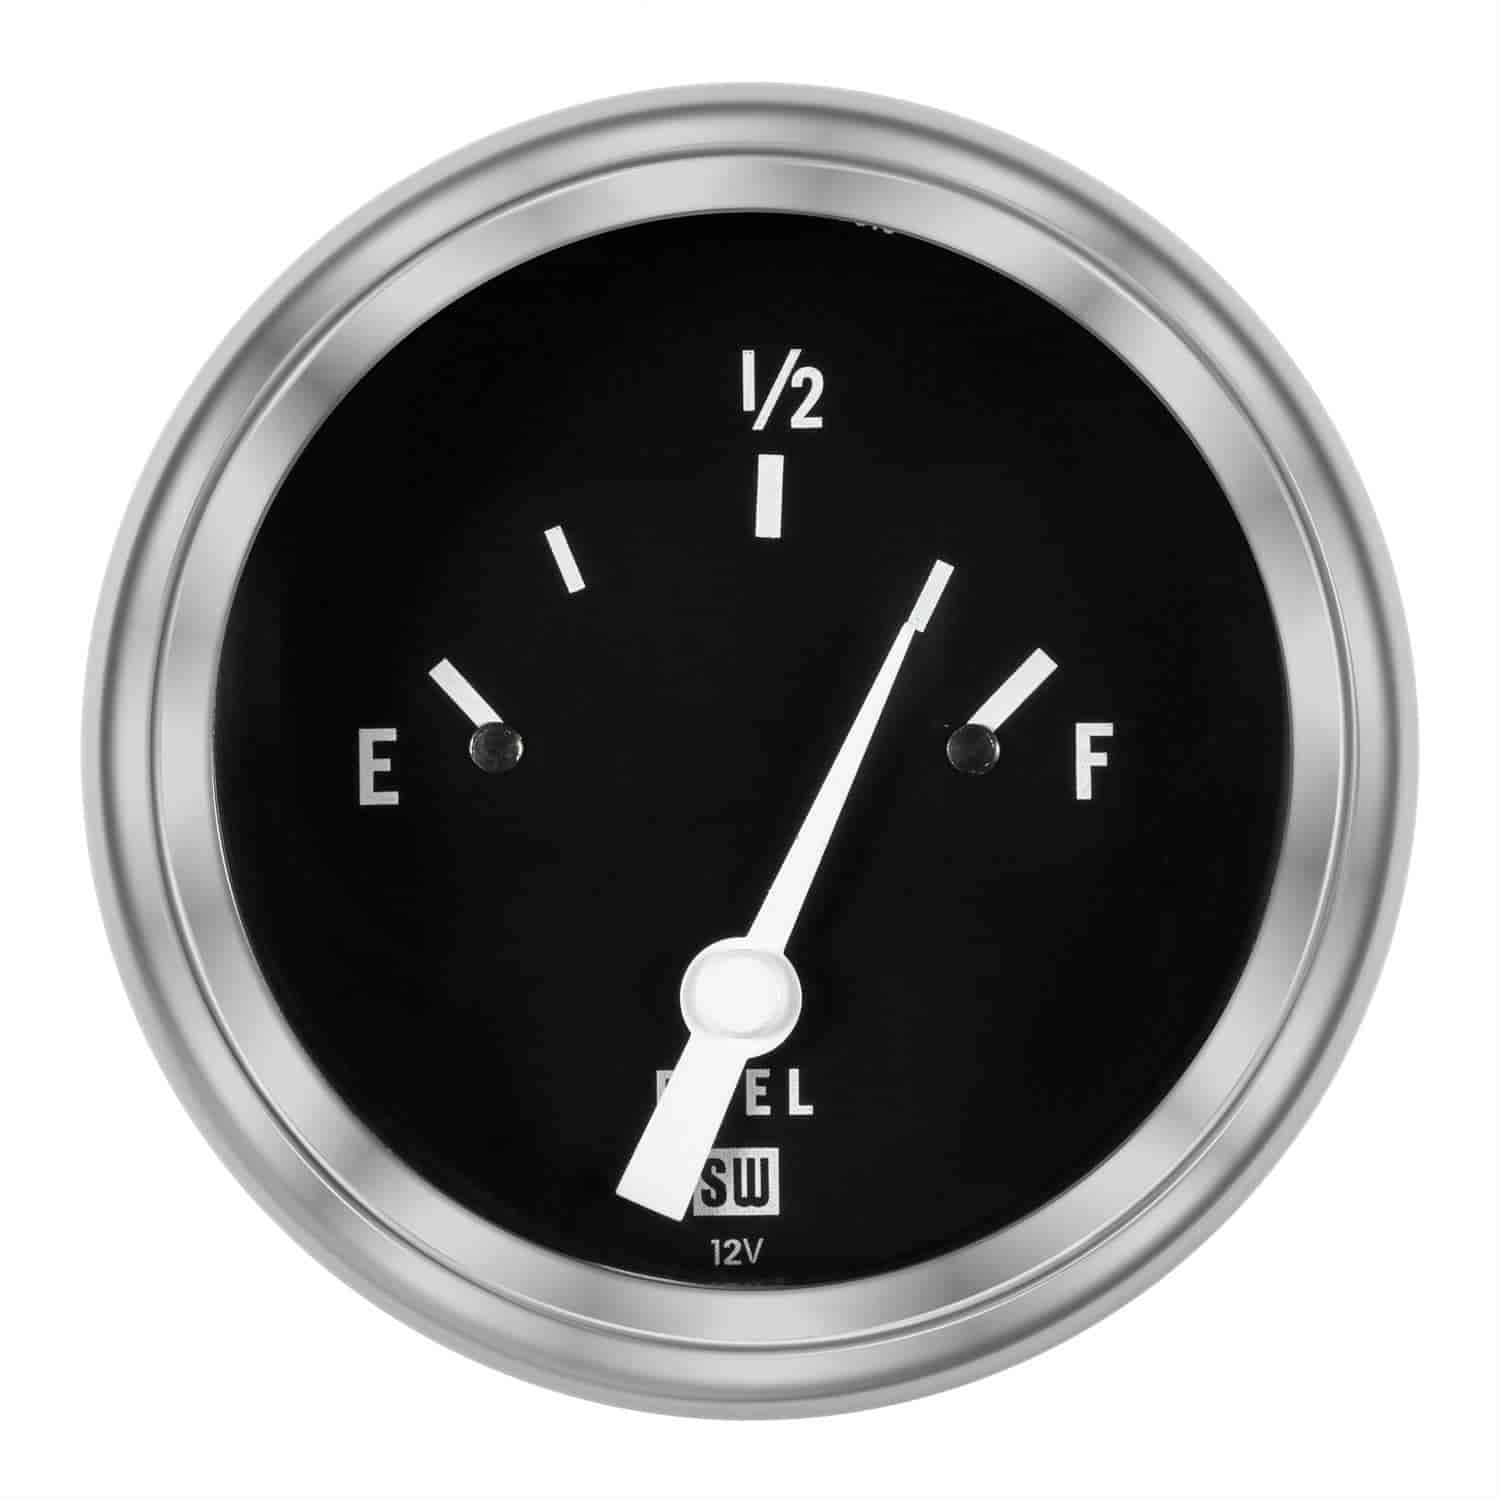 Deluxe-Series Fuel Level Gauge, 2-5/8 in. Diameter, Electrical - Black Facedial